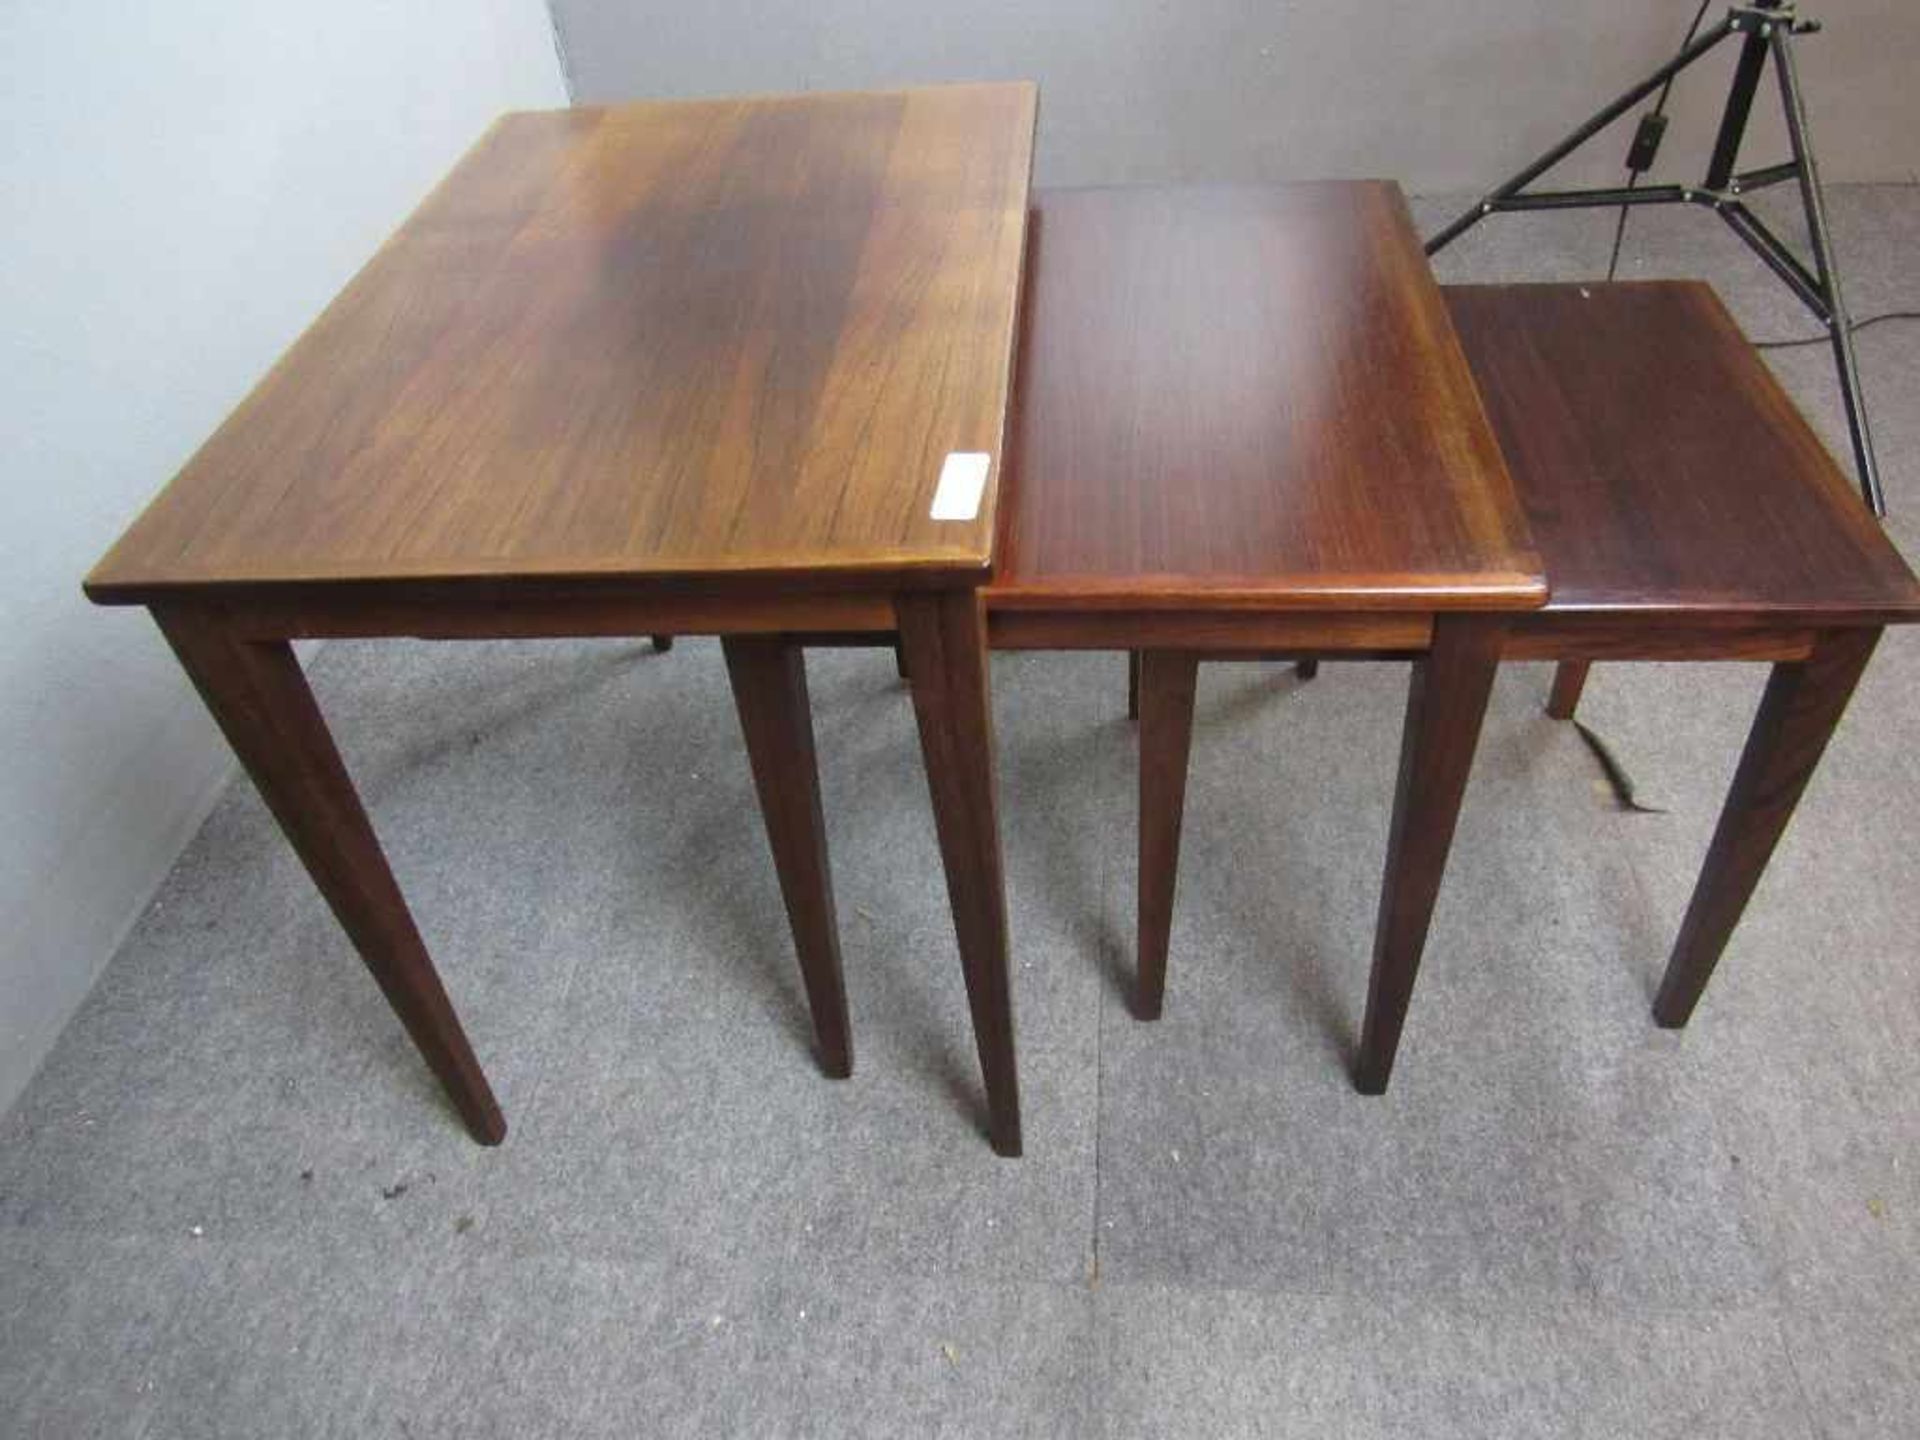 Dreiersatz Nissing Table Teak gestempelt Made in Denmark großer Maße:58x40x53cm- - -20.00 % buyer' - Image 6 of 6